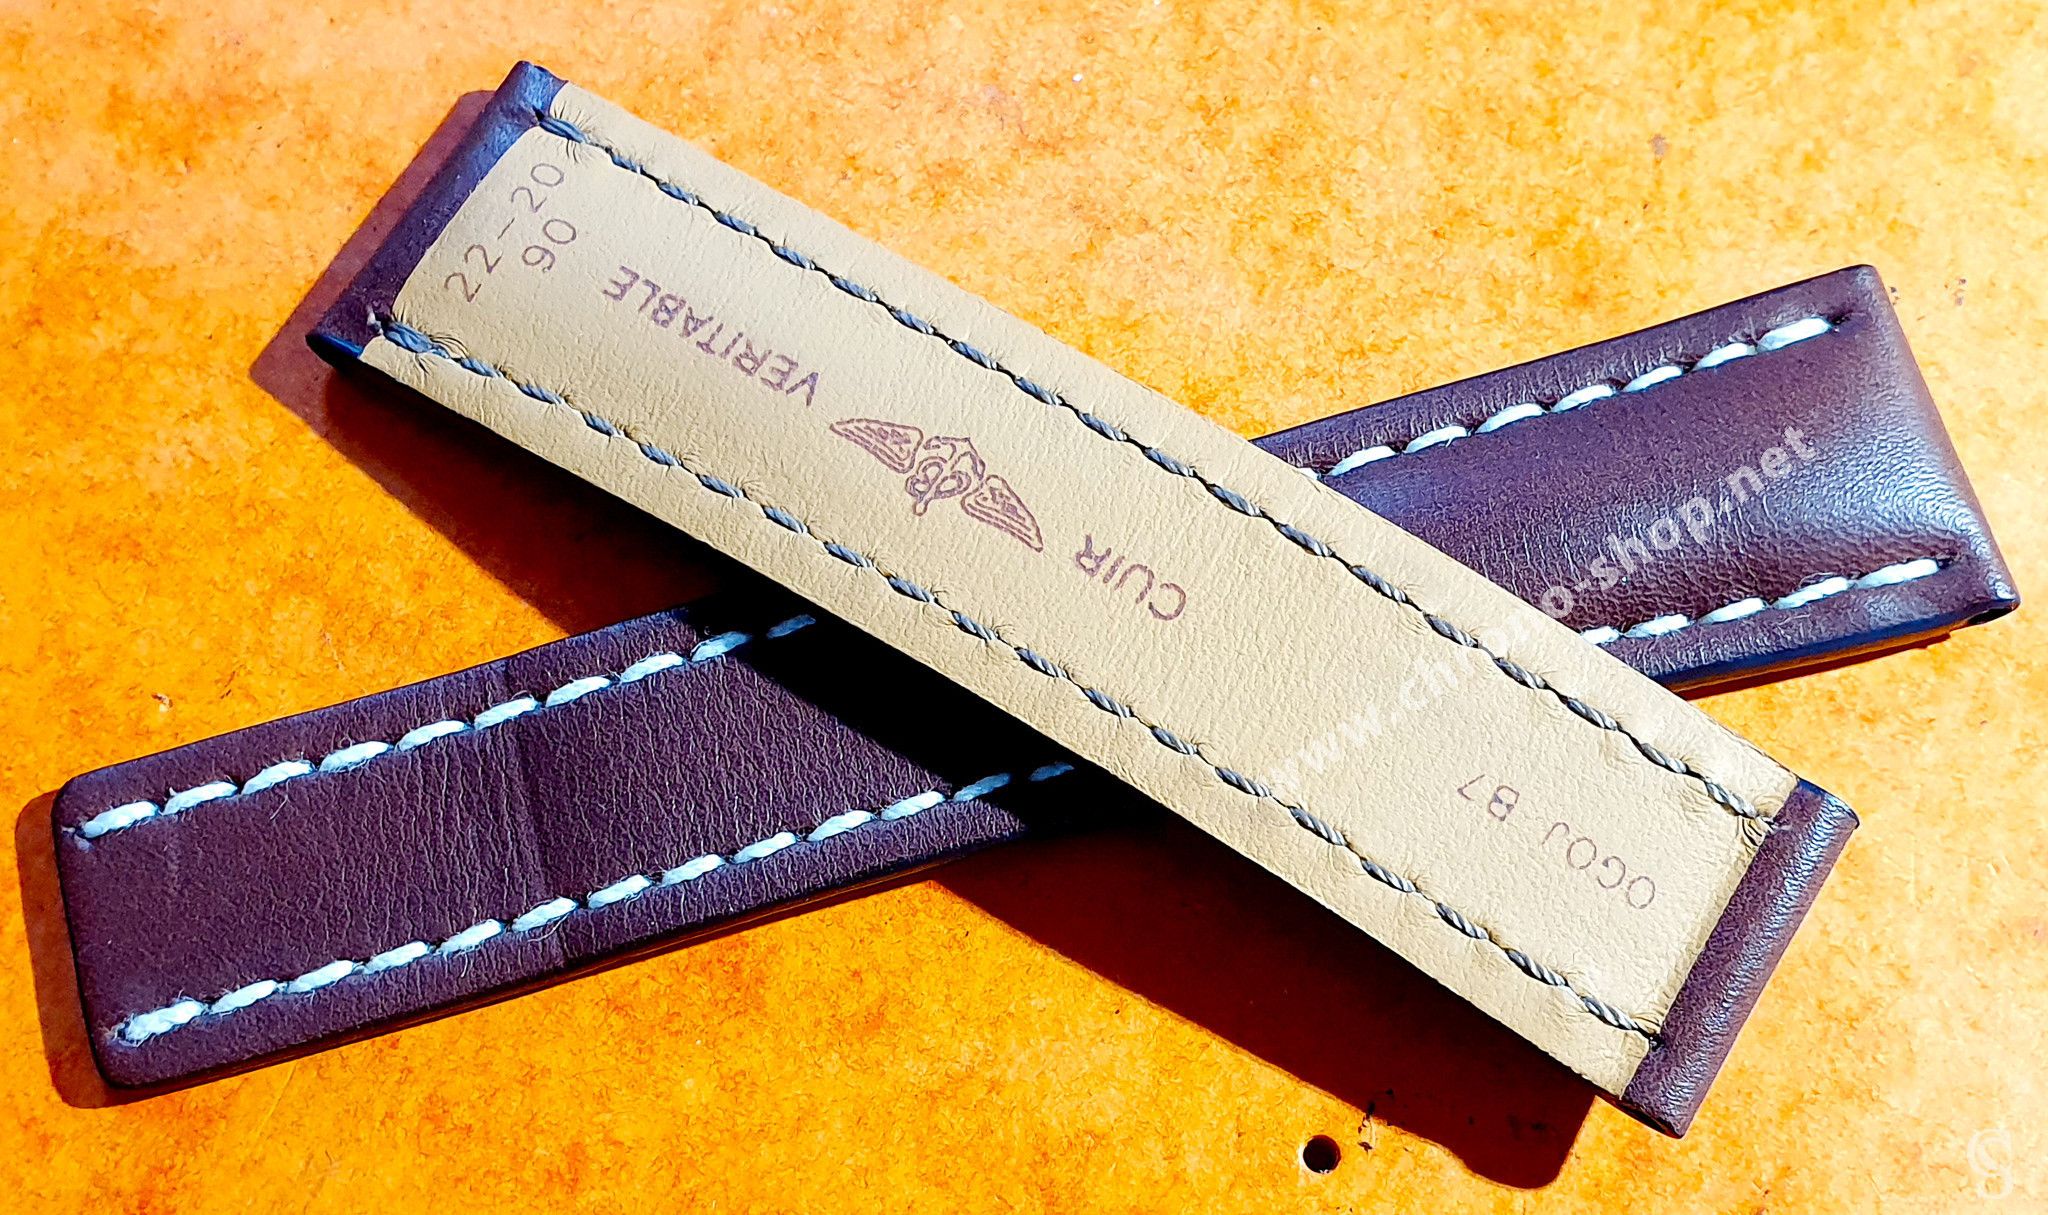 Brown novo nappa calfskin leather strap - 22 mm 438X